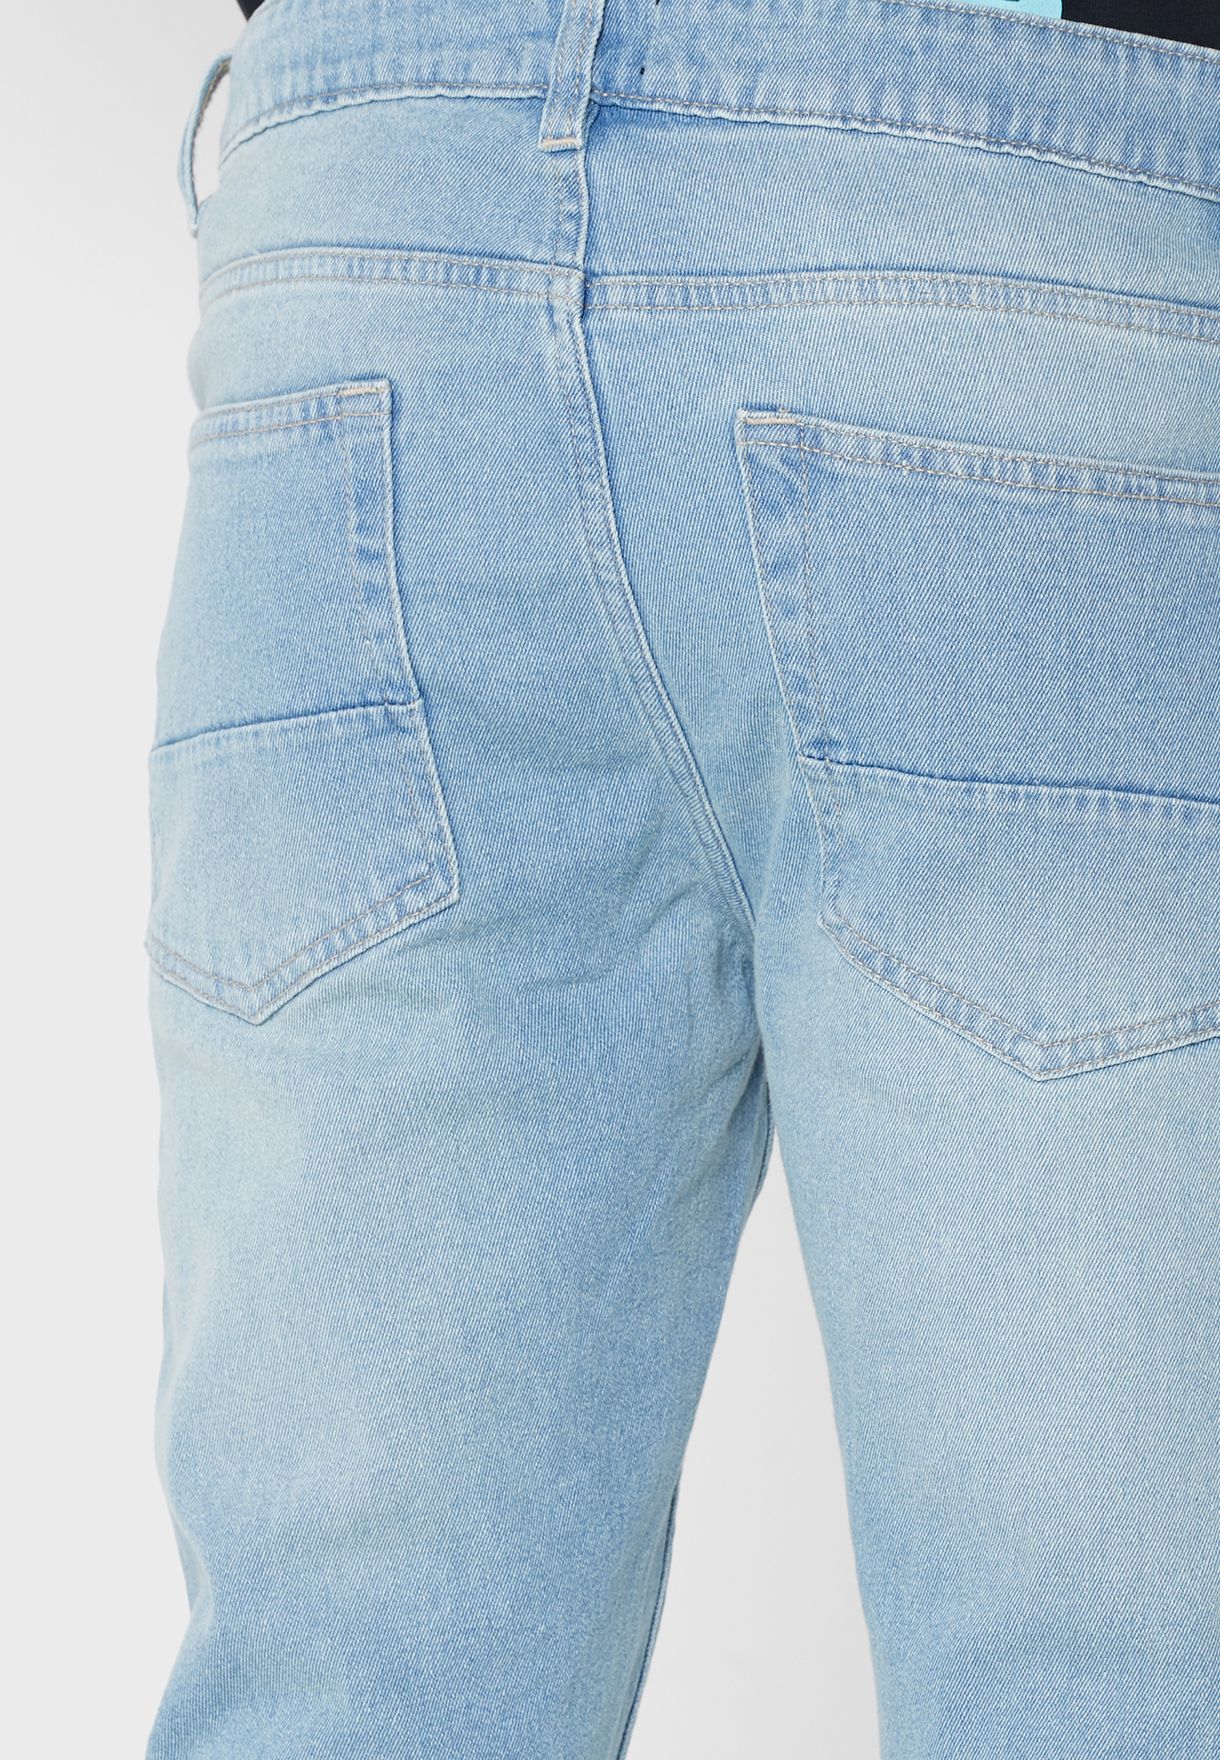 Tapered Fit 5 Pocket Jean